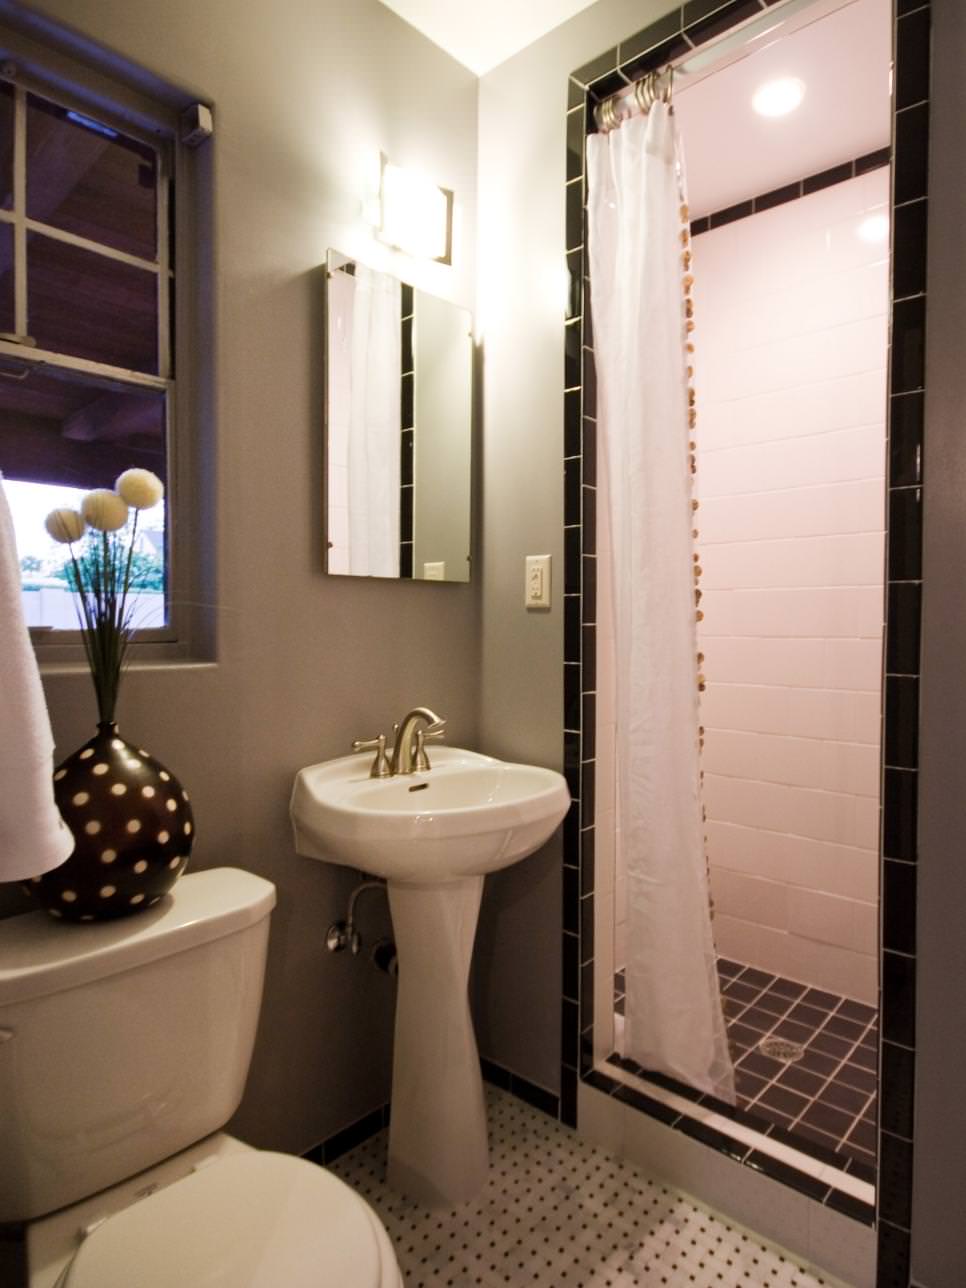 24+ Bathroom Pedestal Sinks Ideas, Designs | Design Trends - Premium